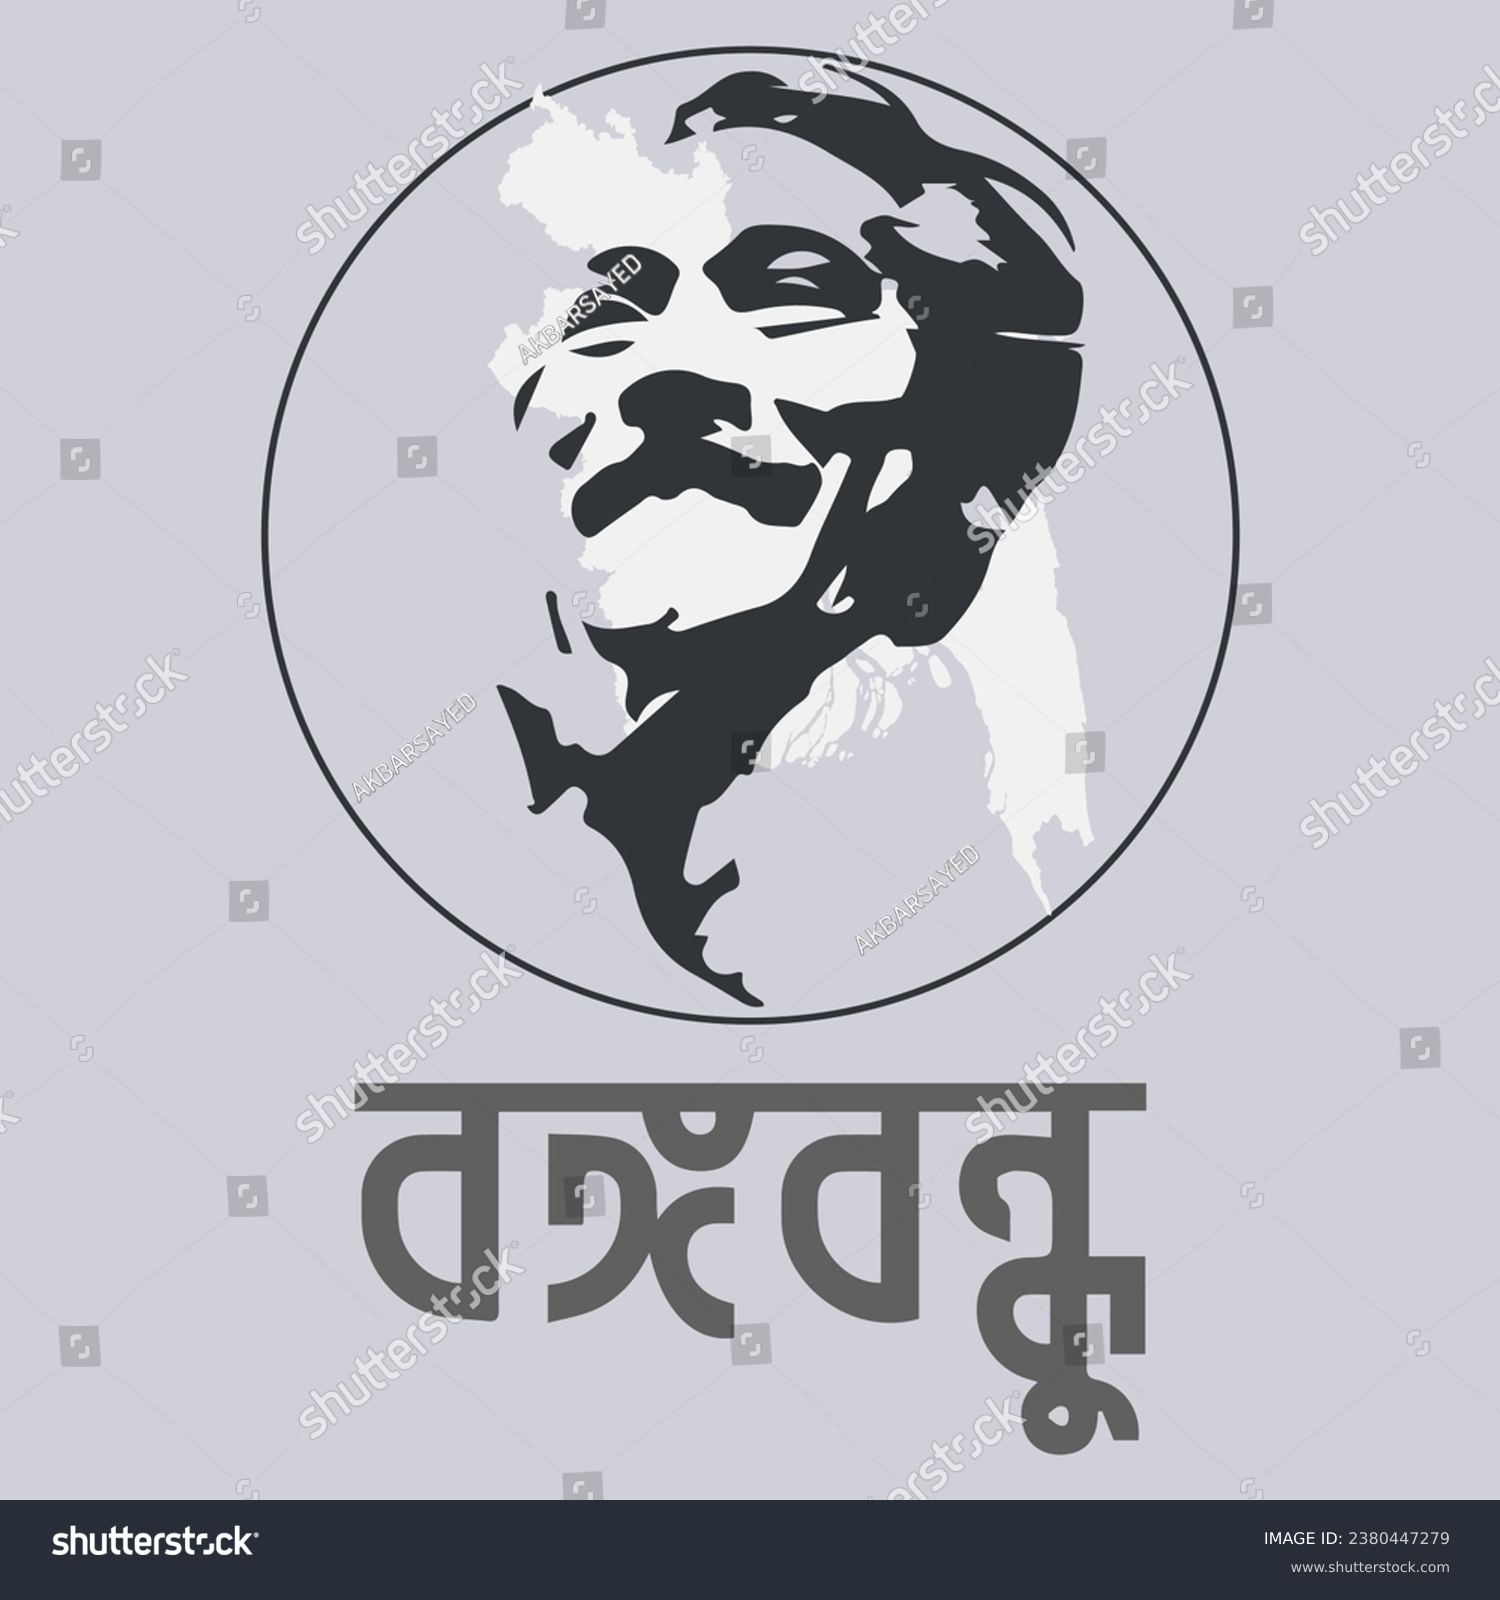 SVG of Bangabandhu Sheikh Mujibur Rahman a
Flat vector illustration design. svg